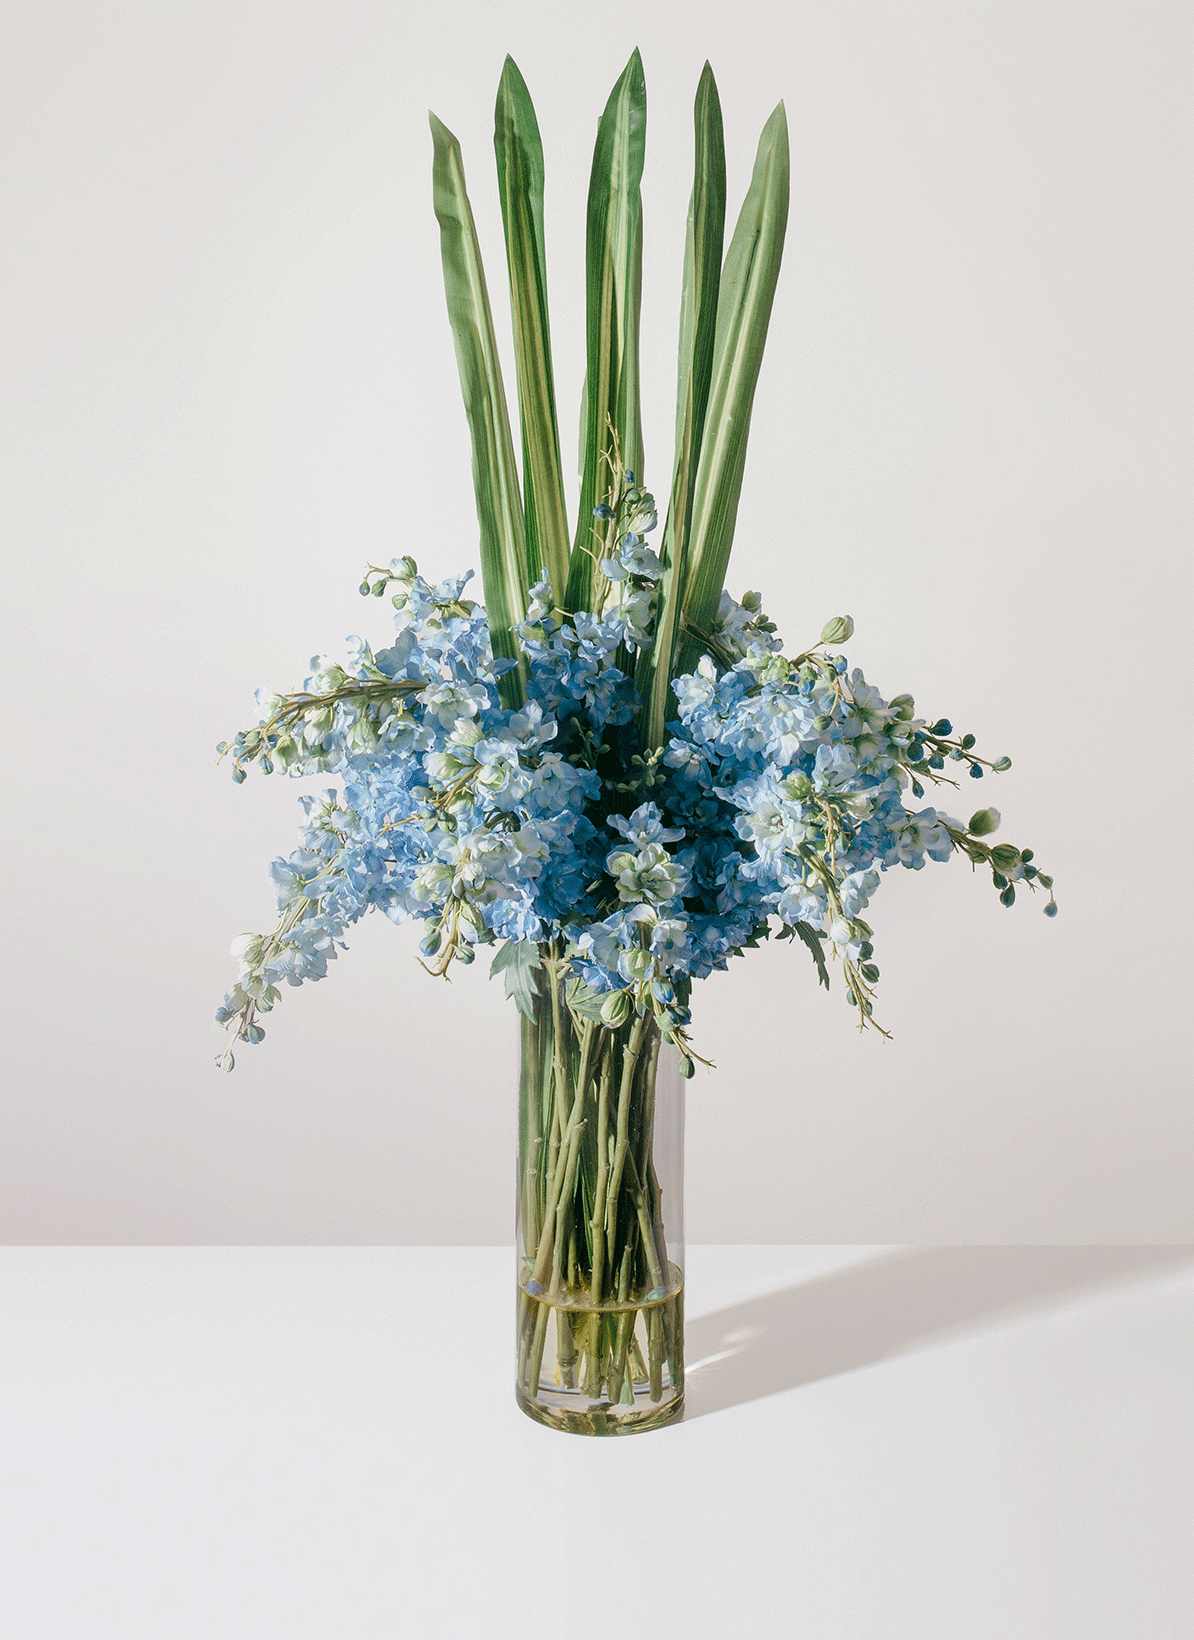 Our stunningly UNREAL corporate floral arrangements — Floral Instinct